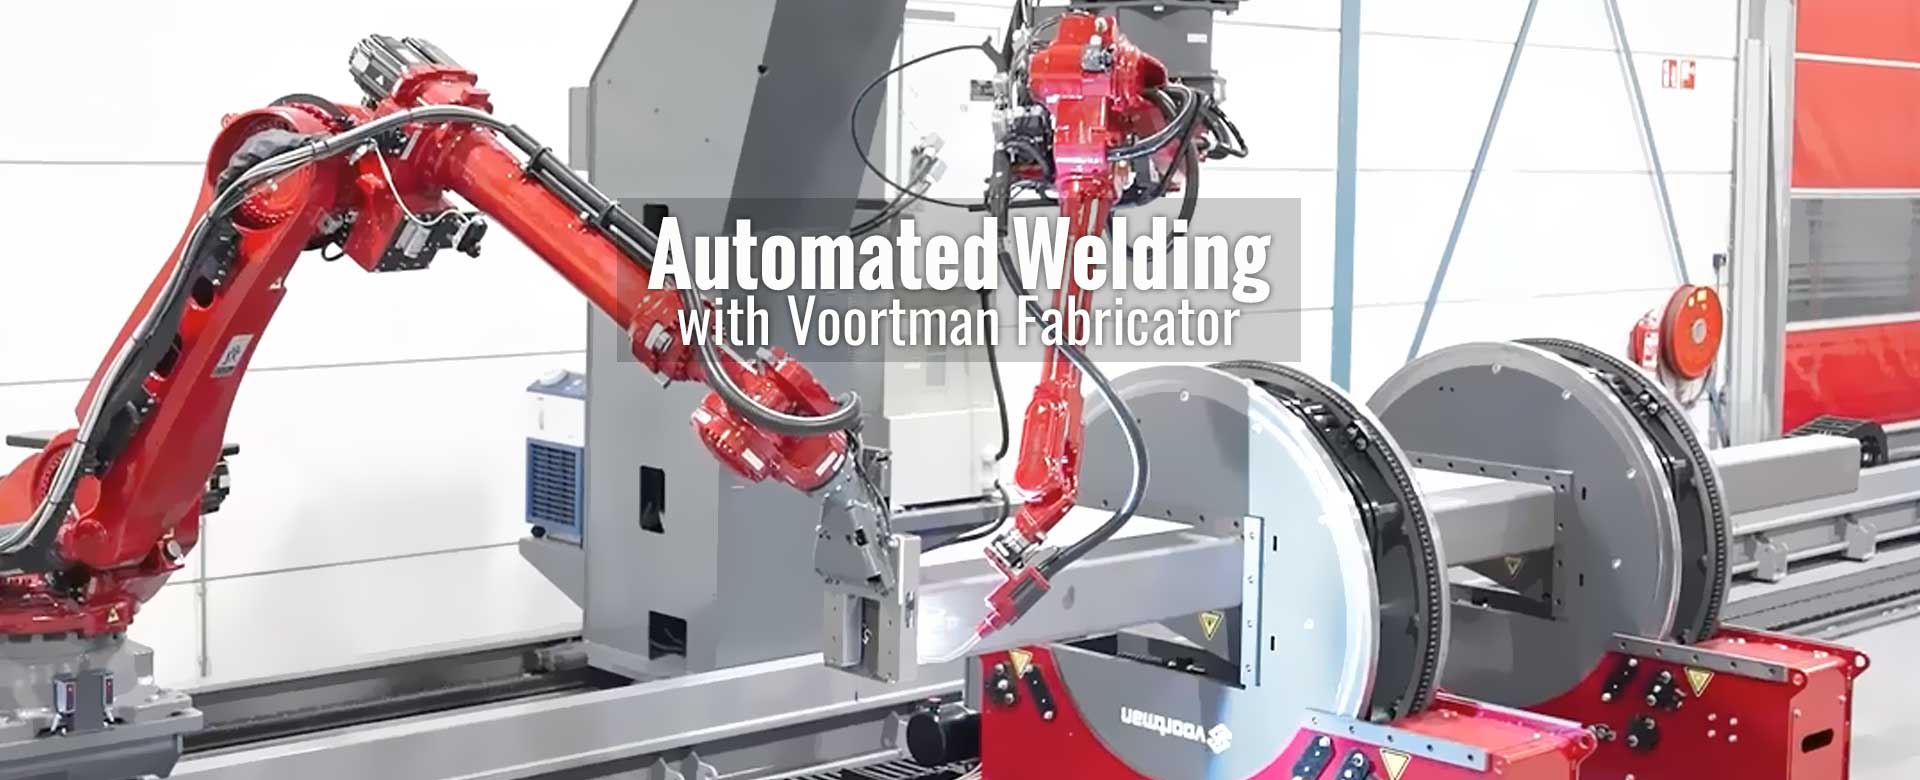 Automated welding with Voortman Fabricator.